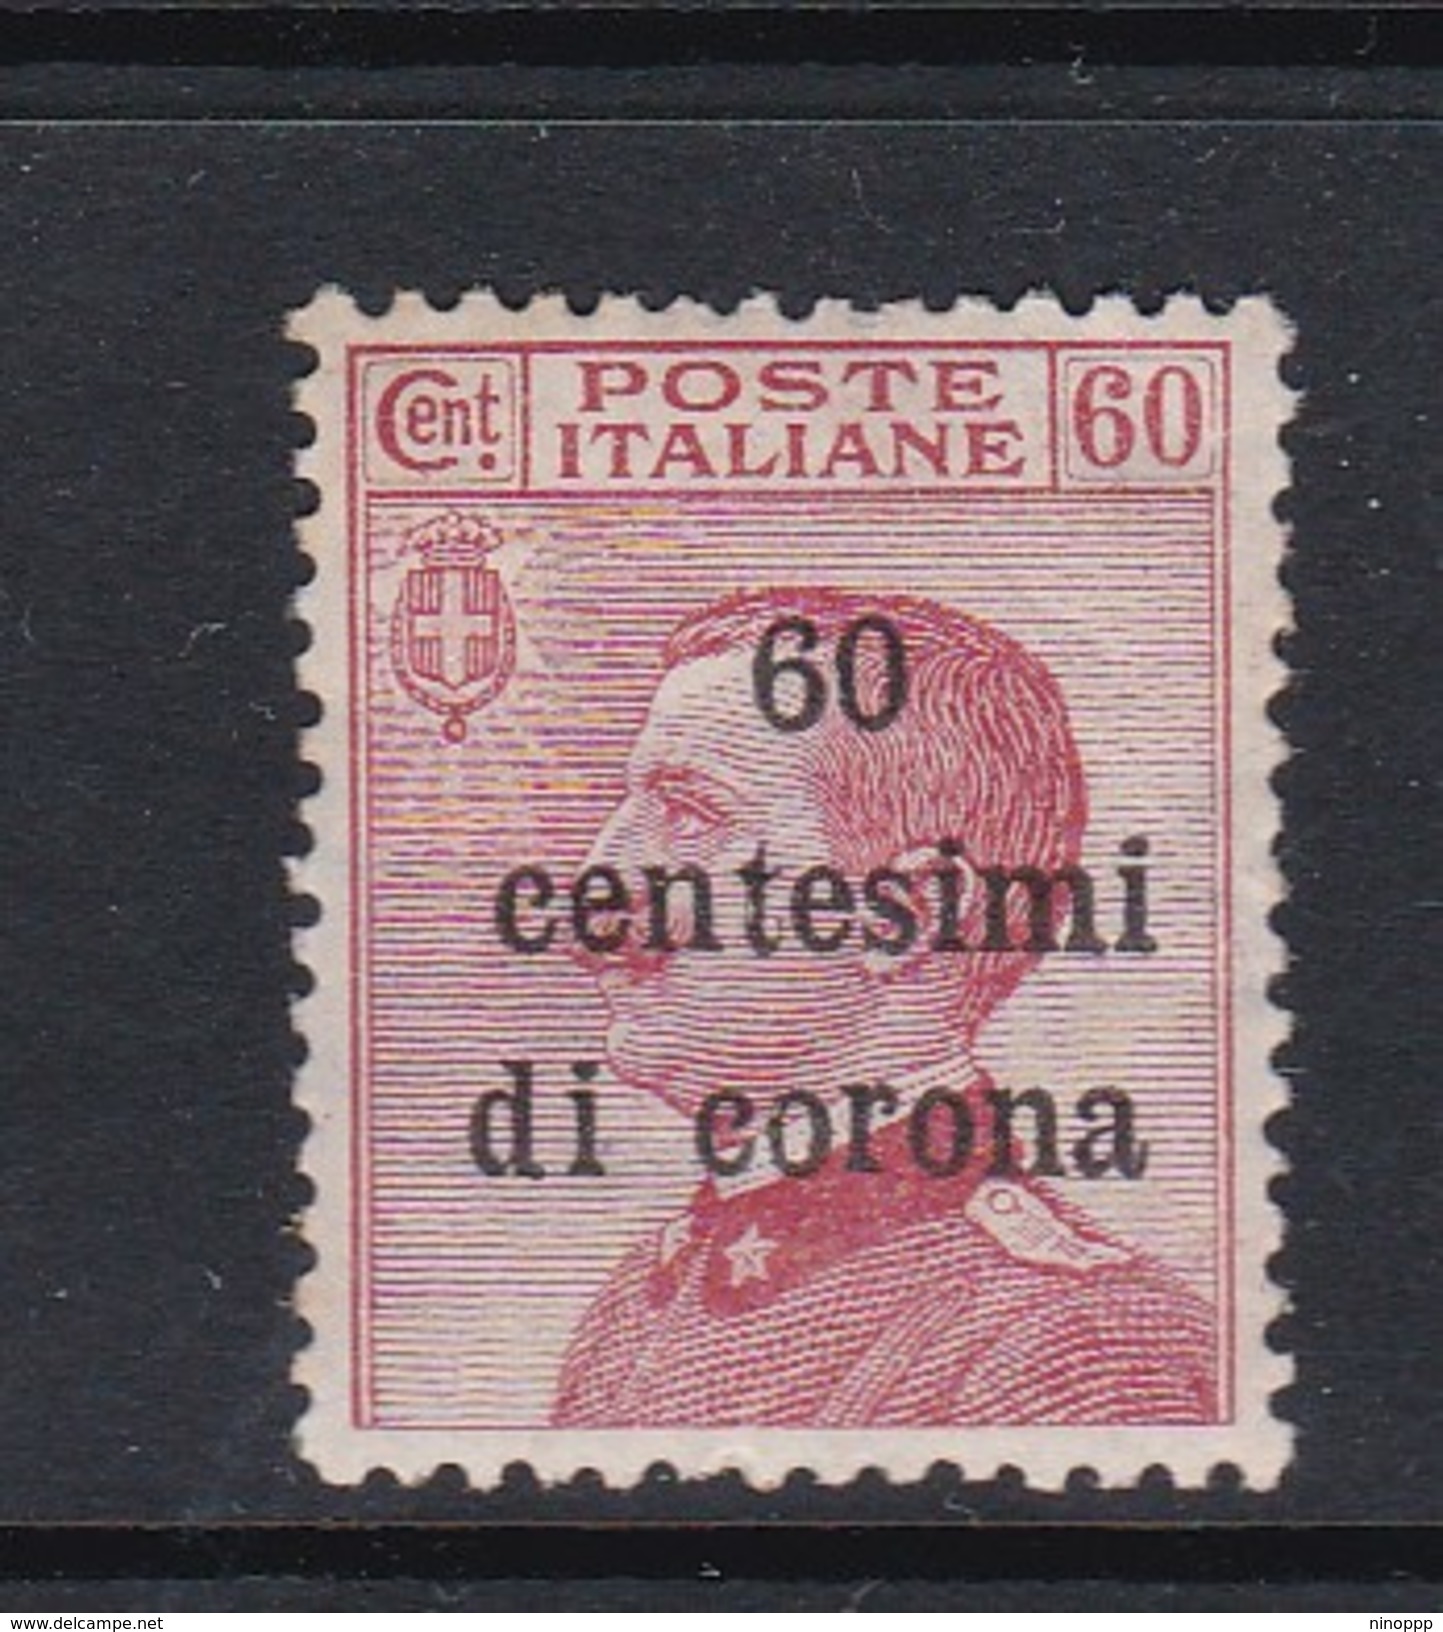 Venezia Giulia N73 1919 Italian Stamps Overprinted 60c On 60c Brown Carmine Mint Hinged - Austrian Occupation